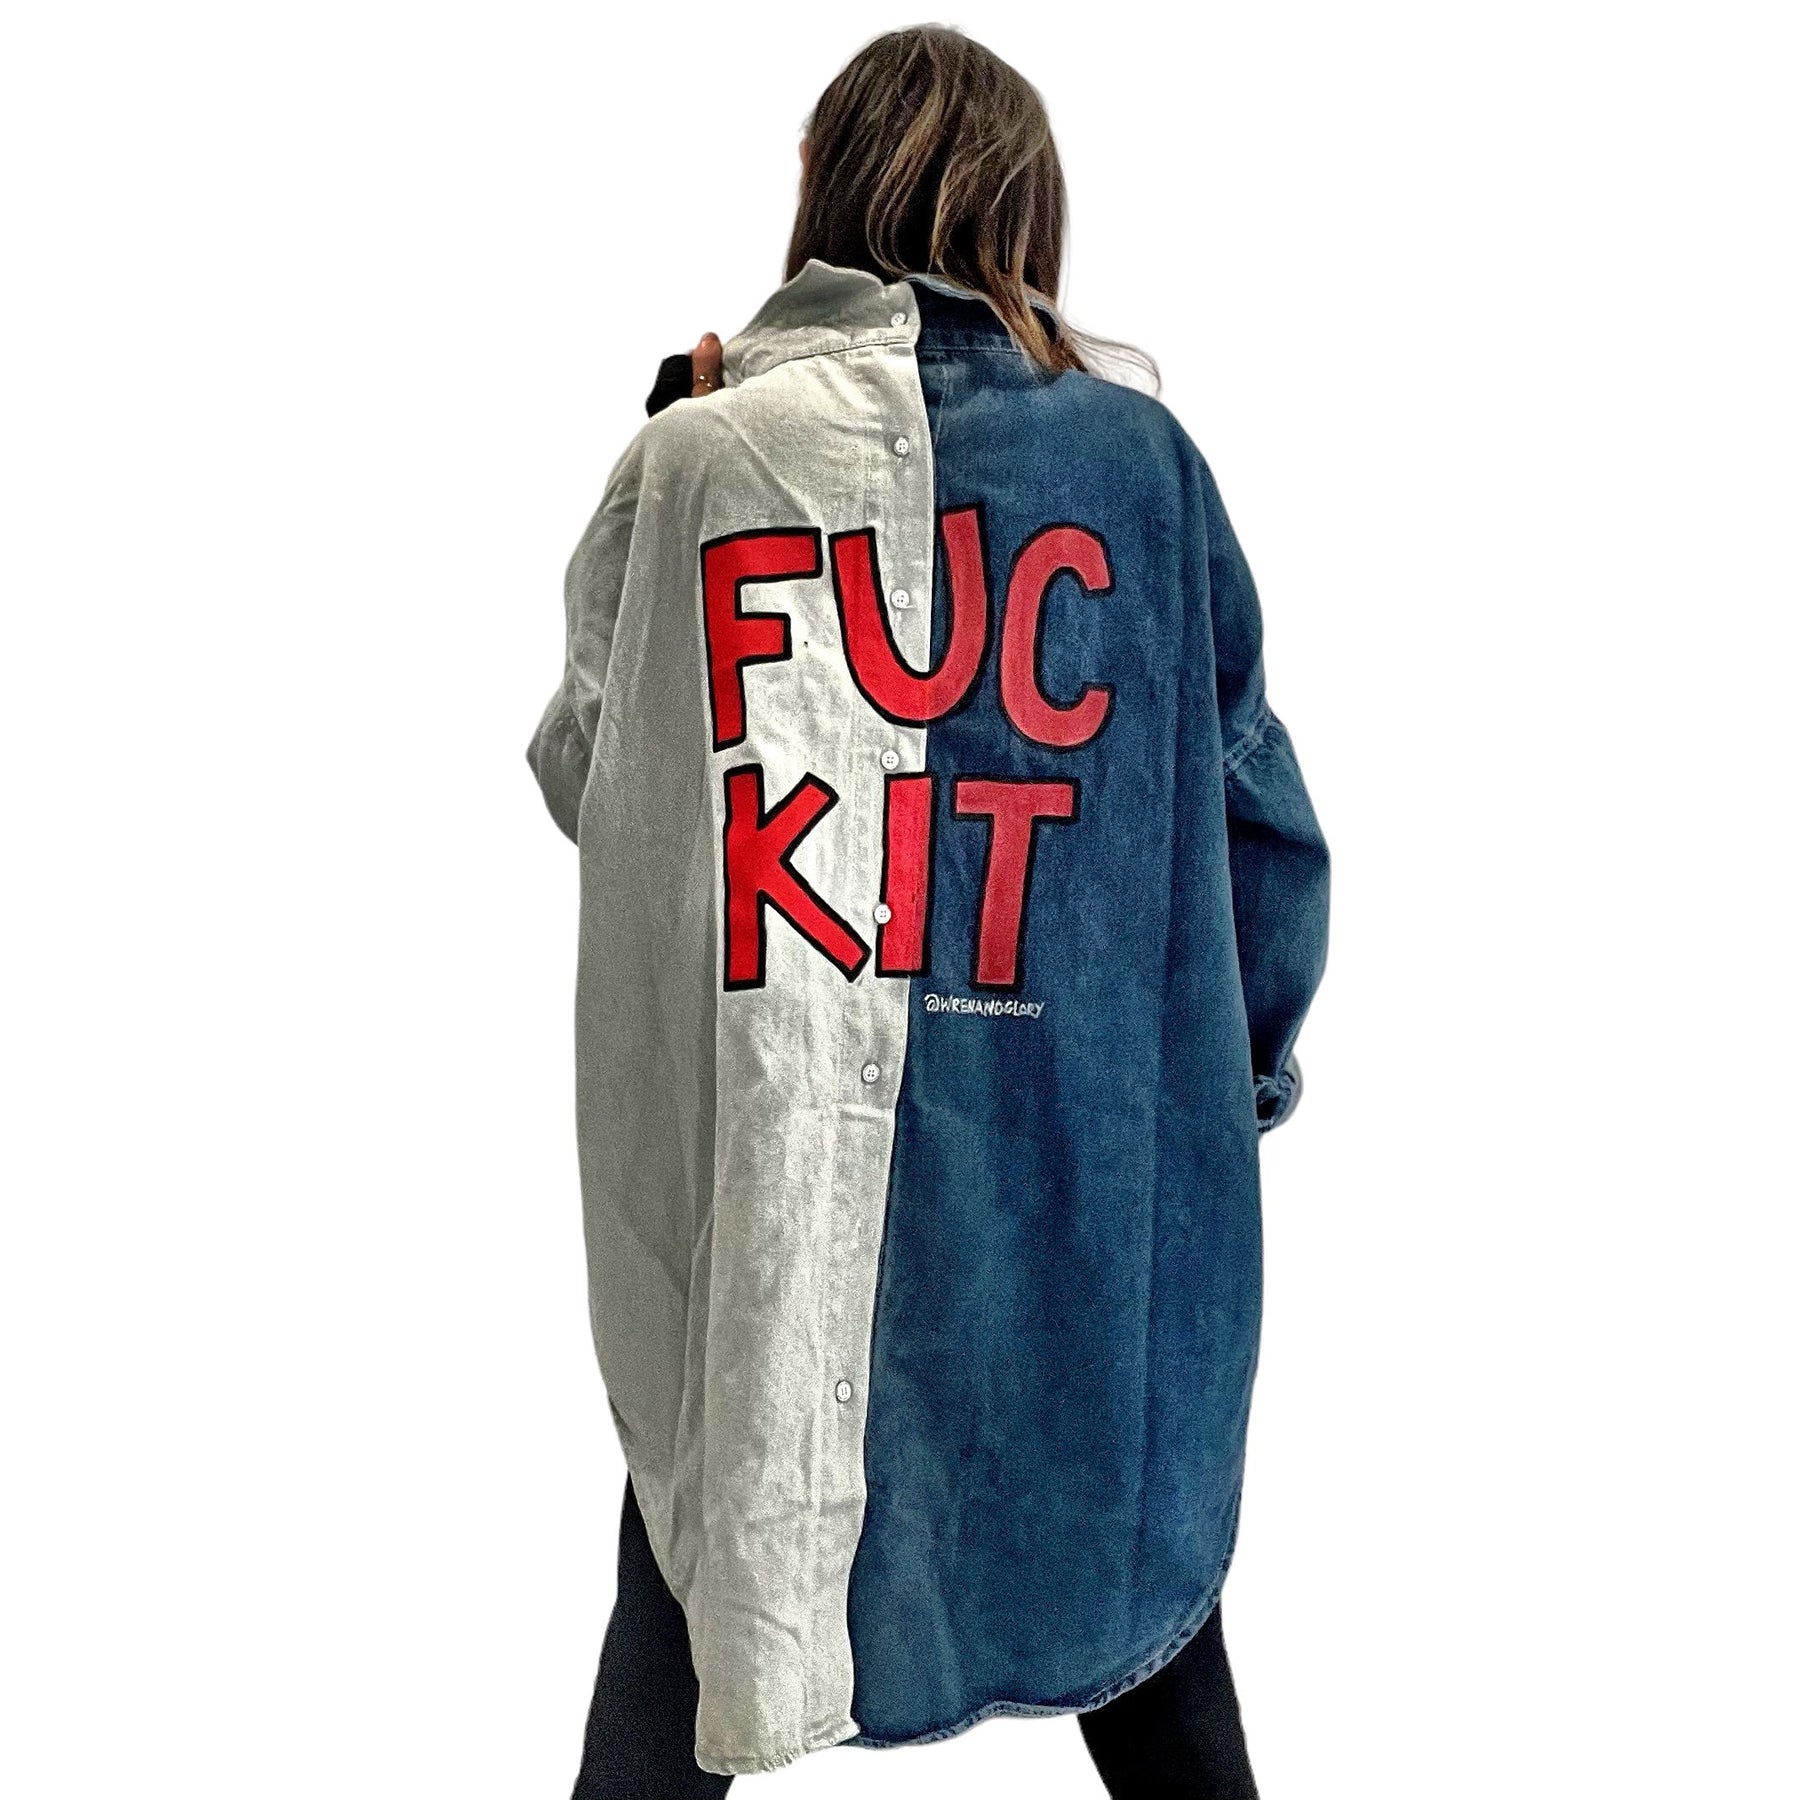 'FKIT' Painted Denim Shirt